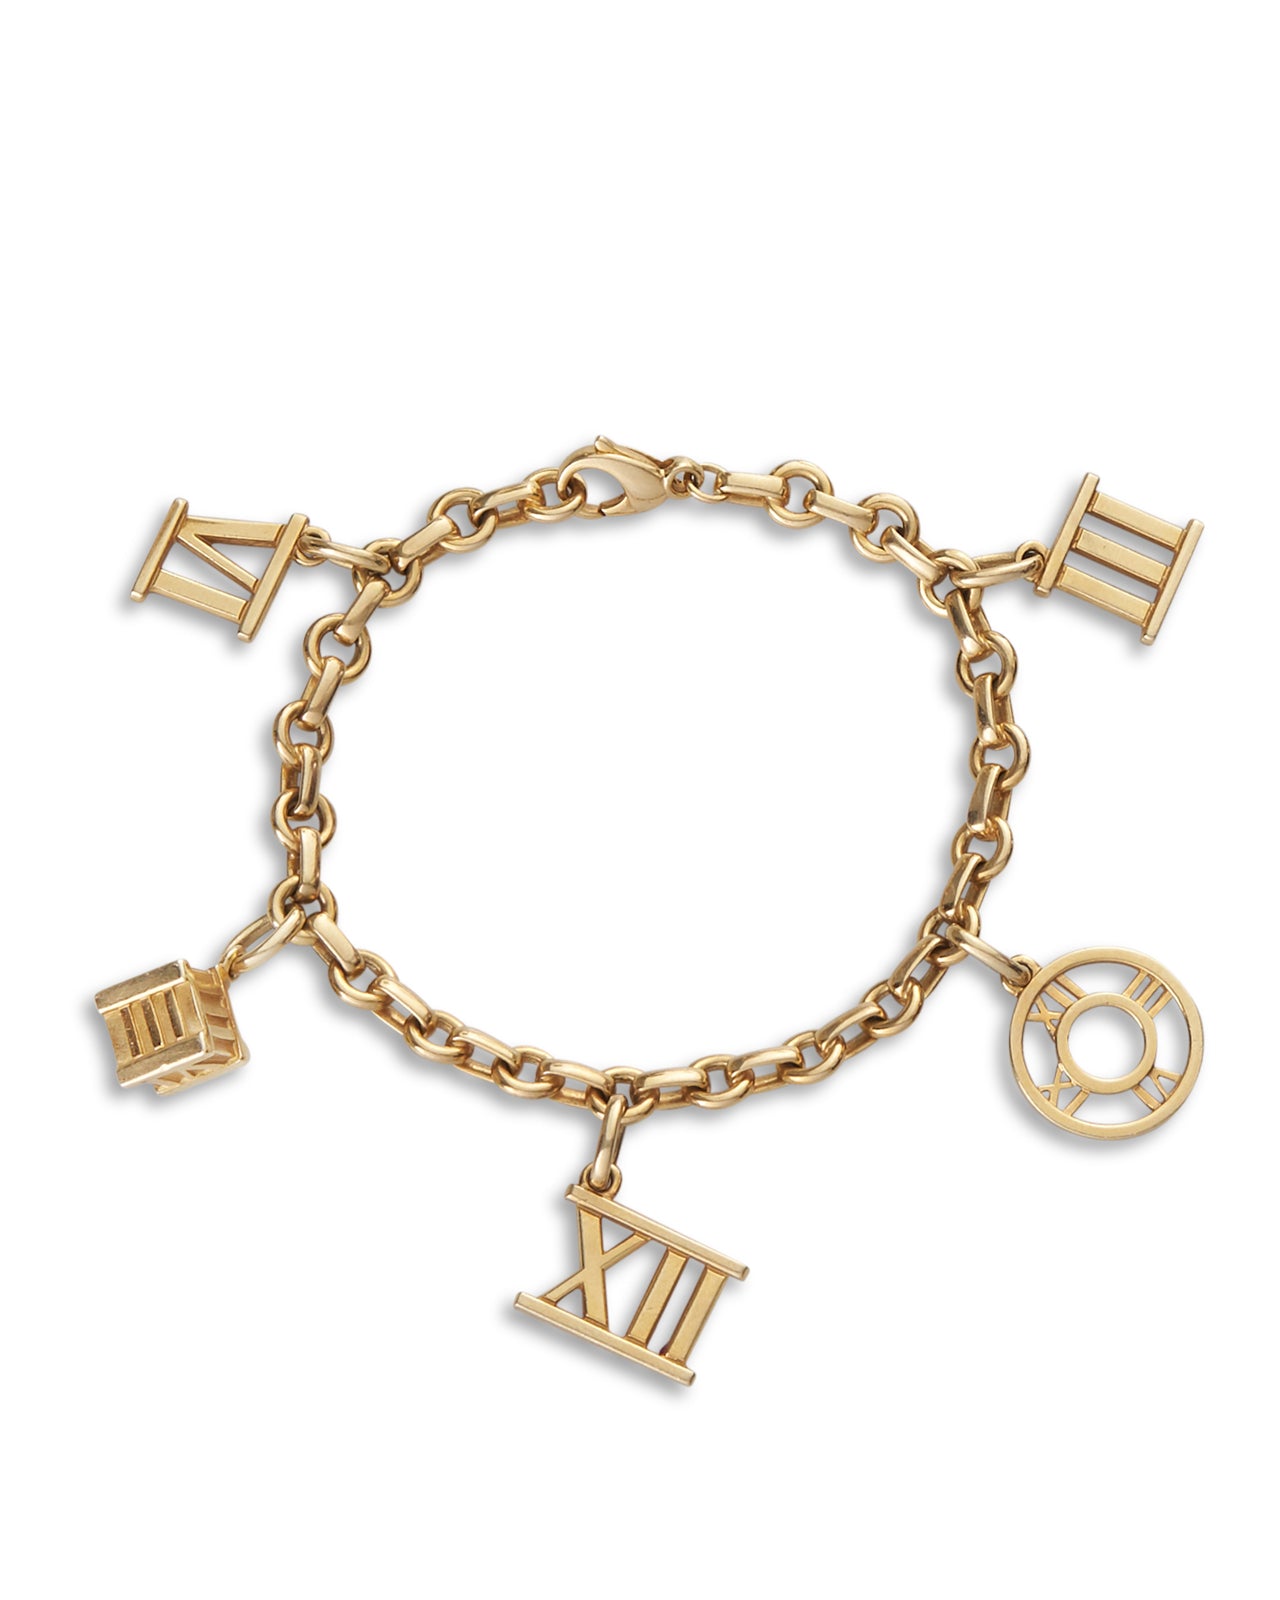 Vintage Gold Atlas Charm Bracelet, Tiffany & Co.